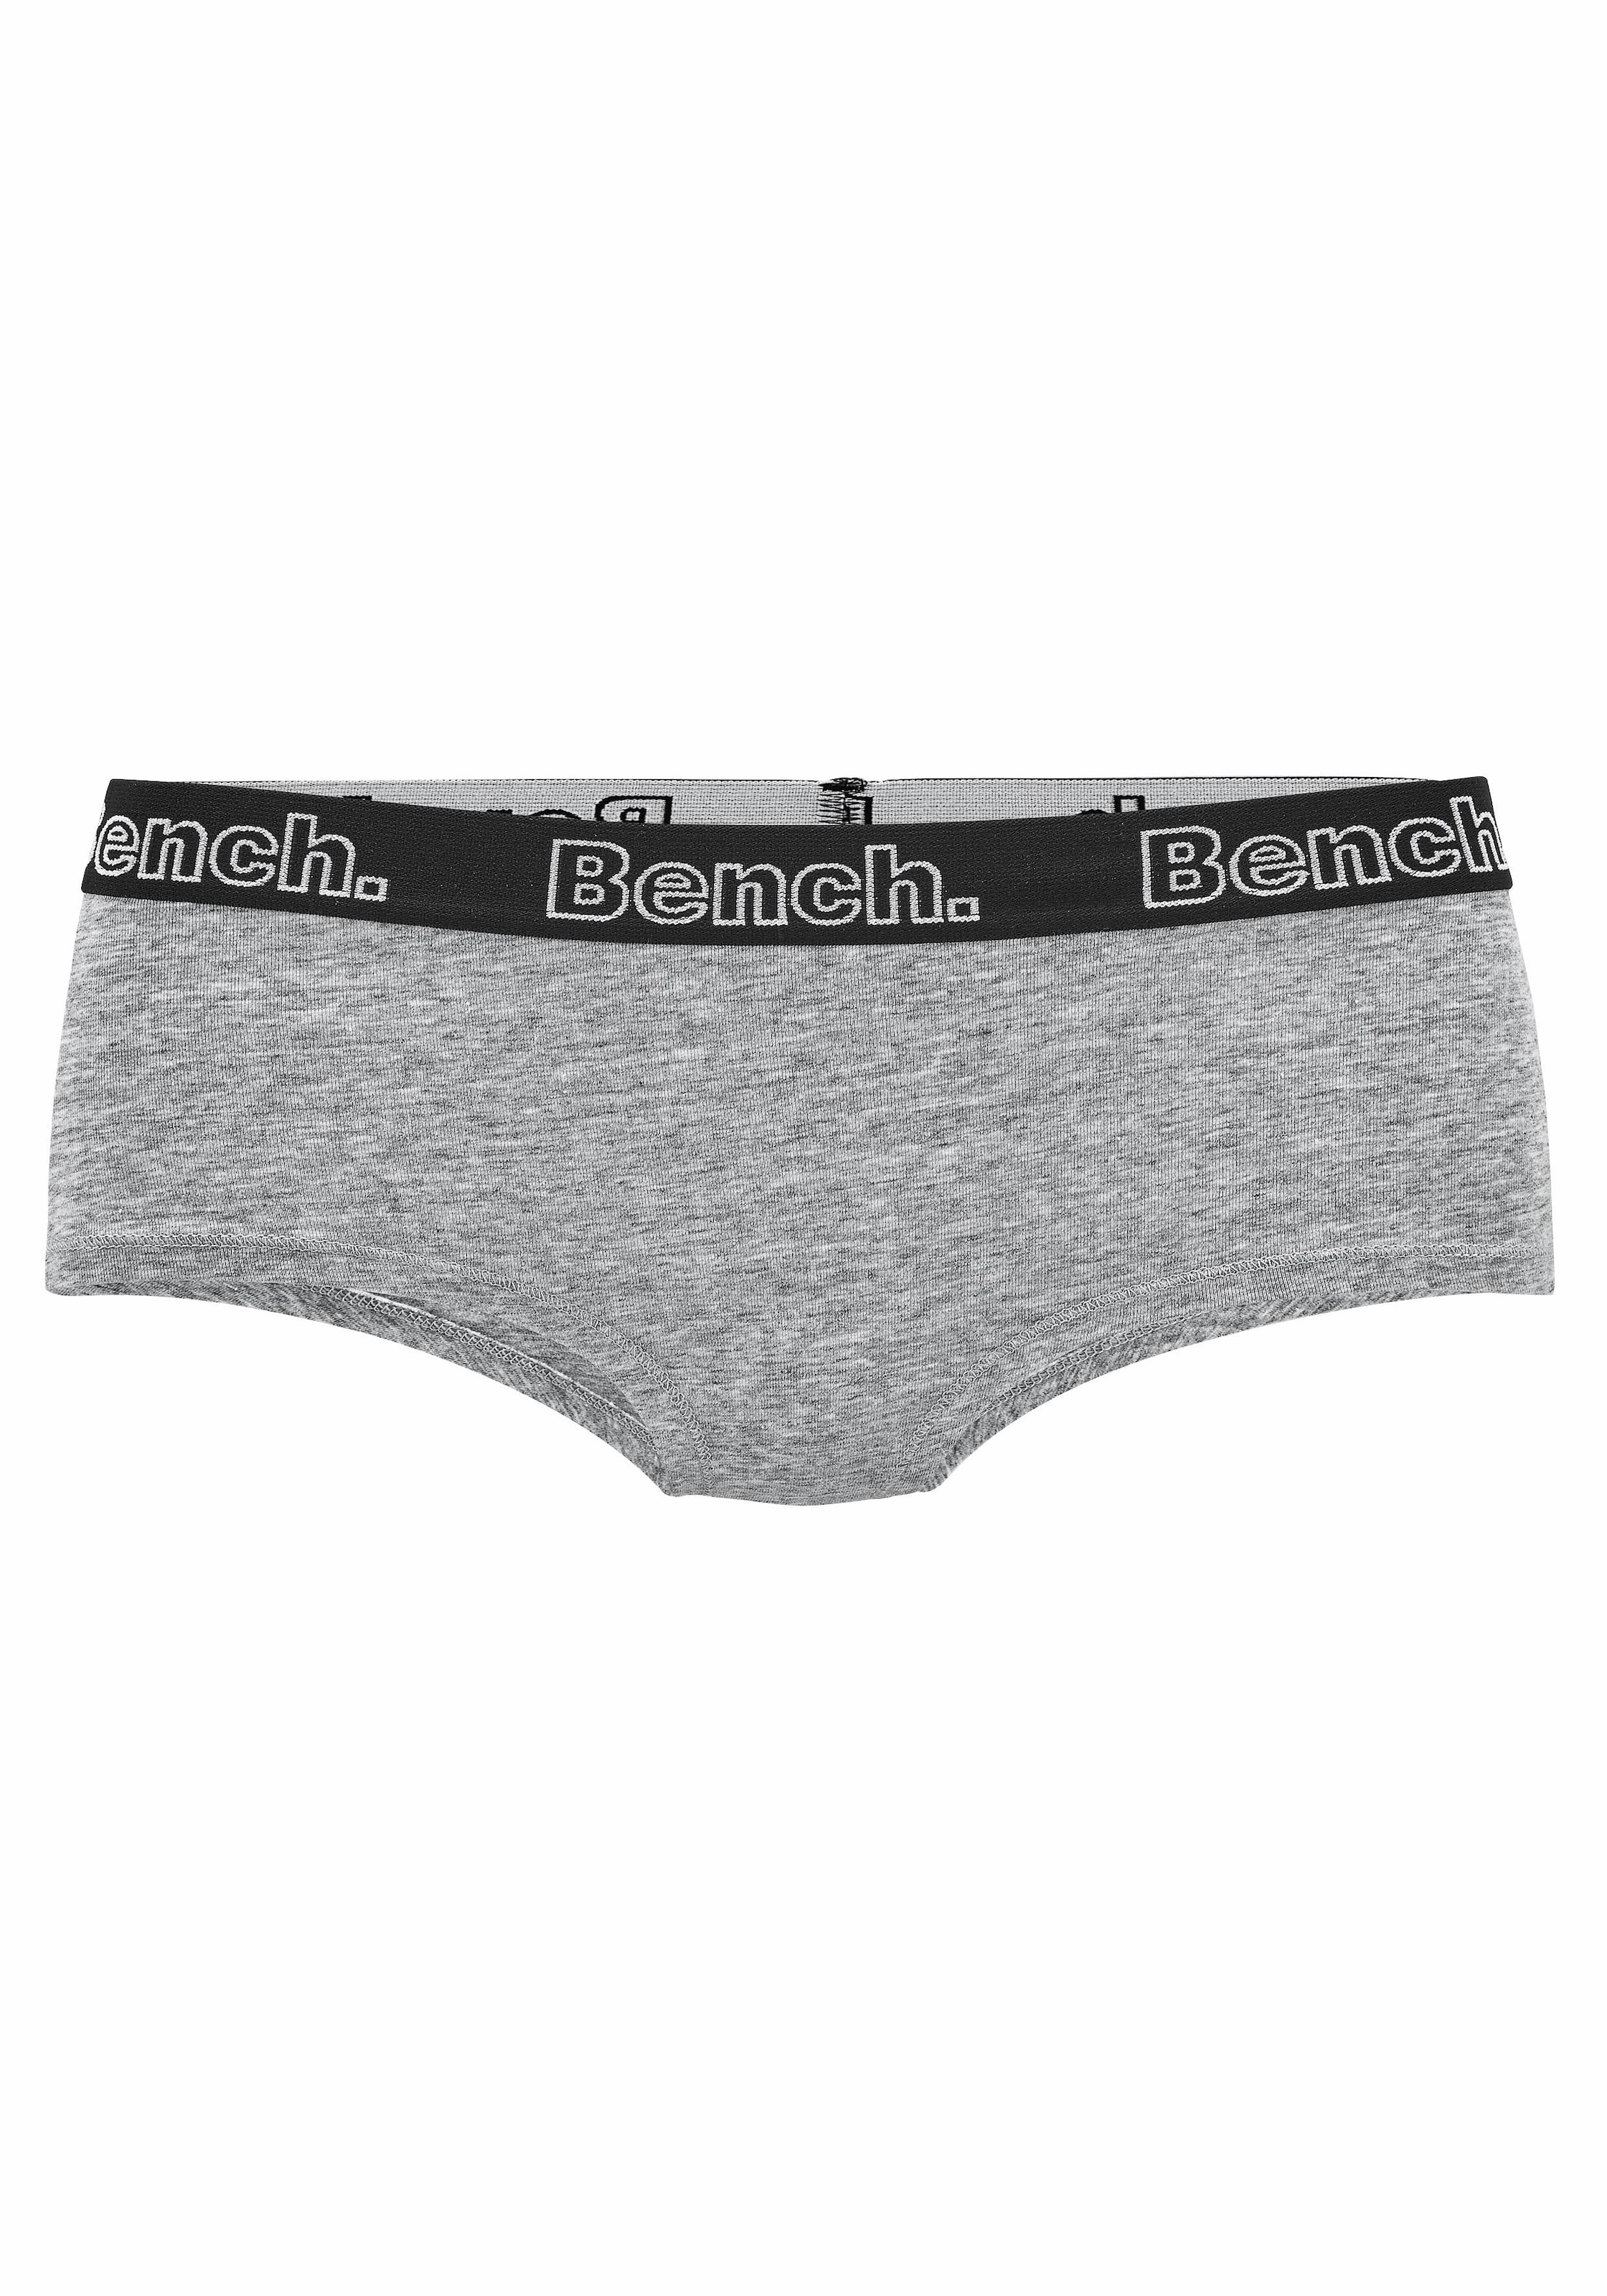 ✌ Bench. Panty, Logo 3 Acheter schwarzem en mit Webbund (Packung, St.), ligne